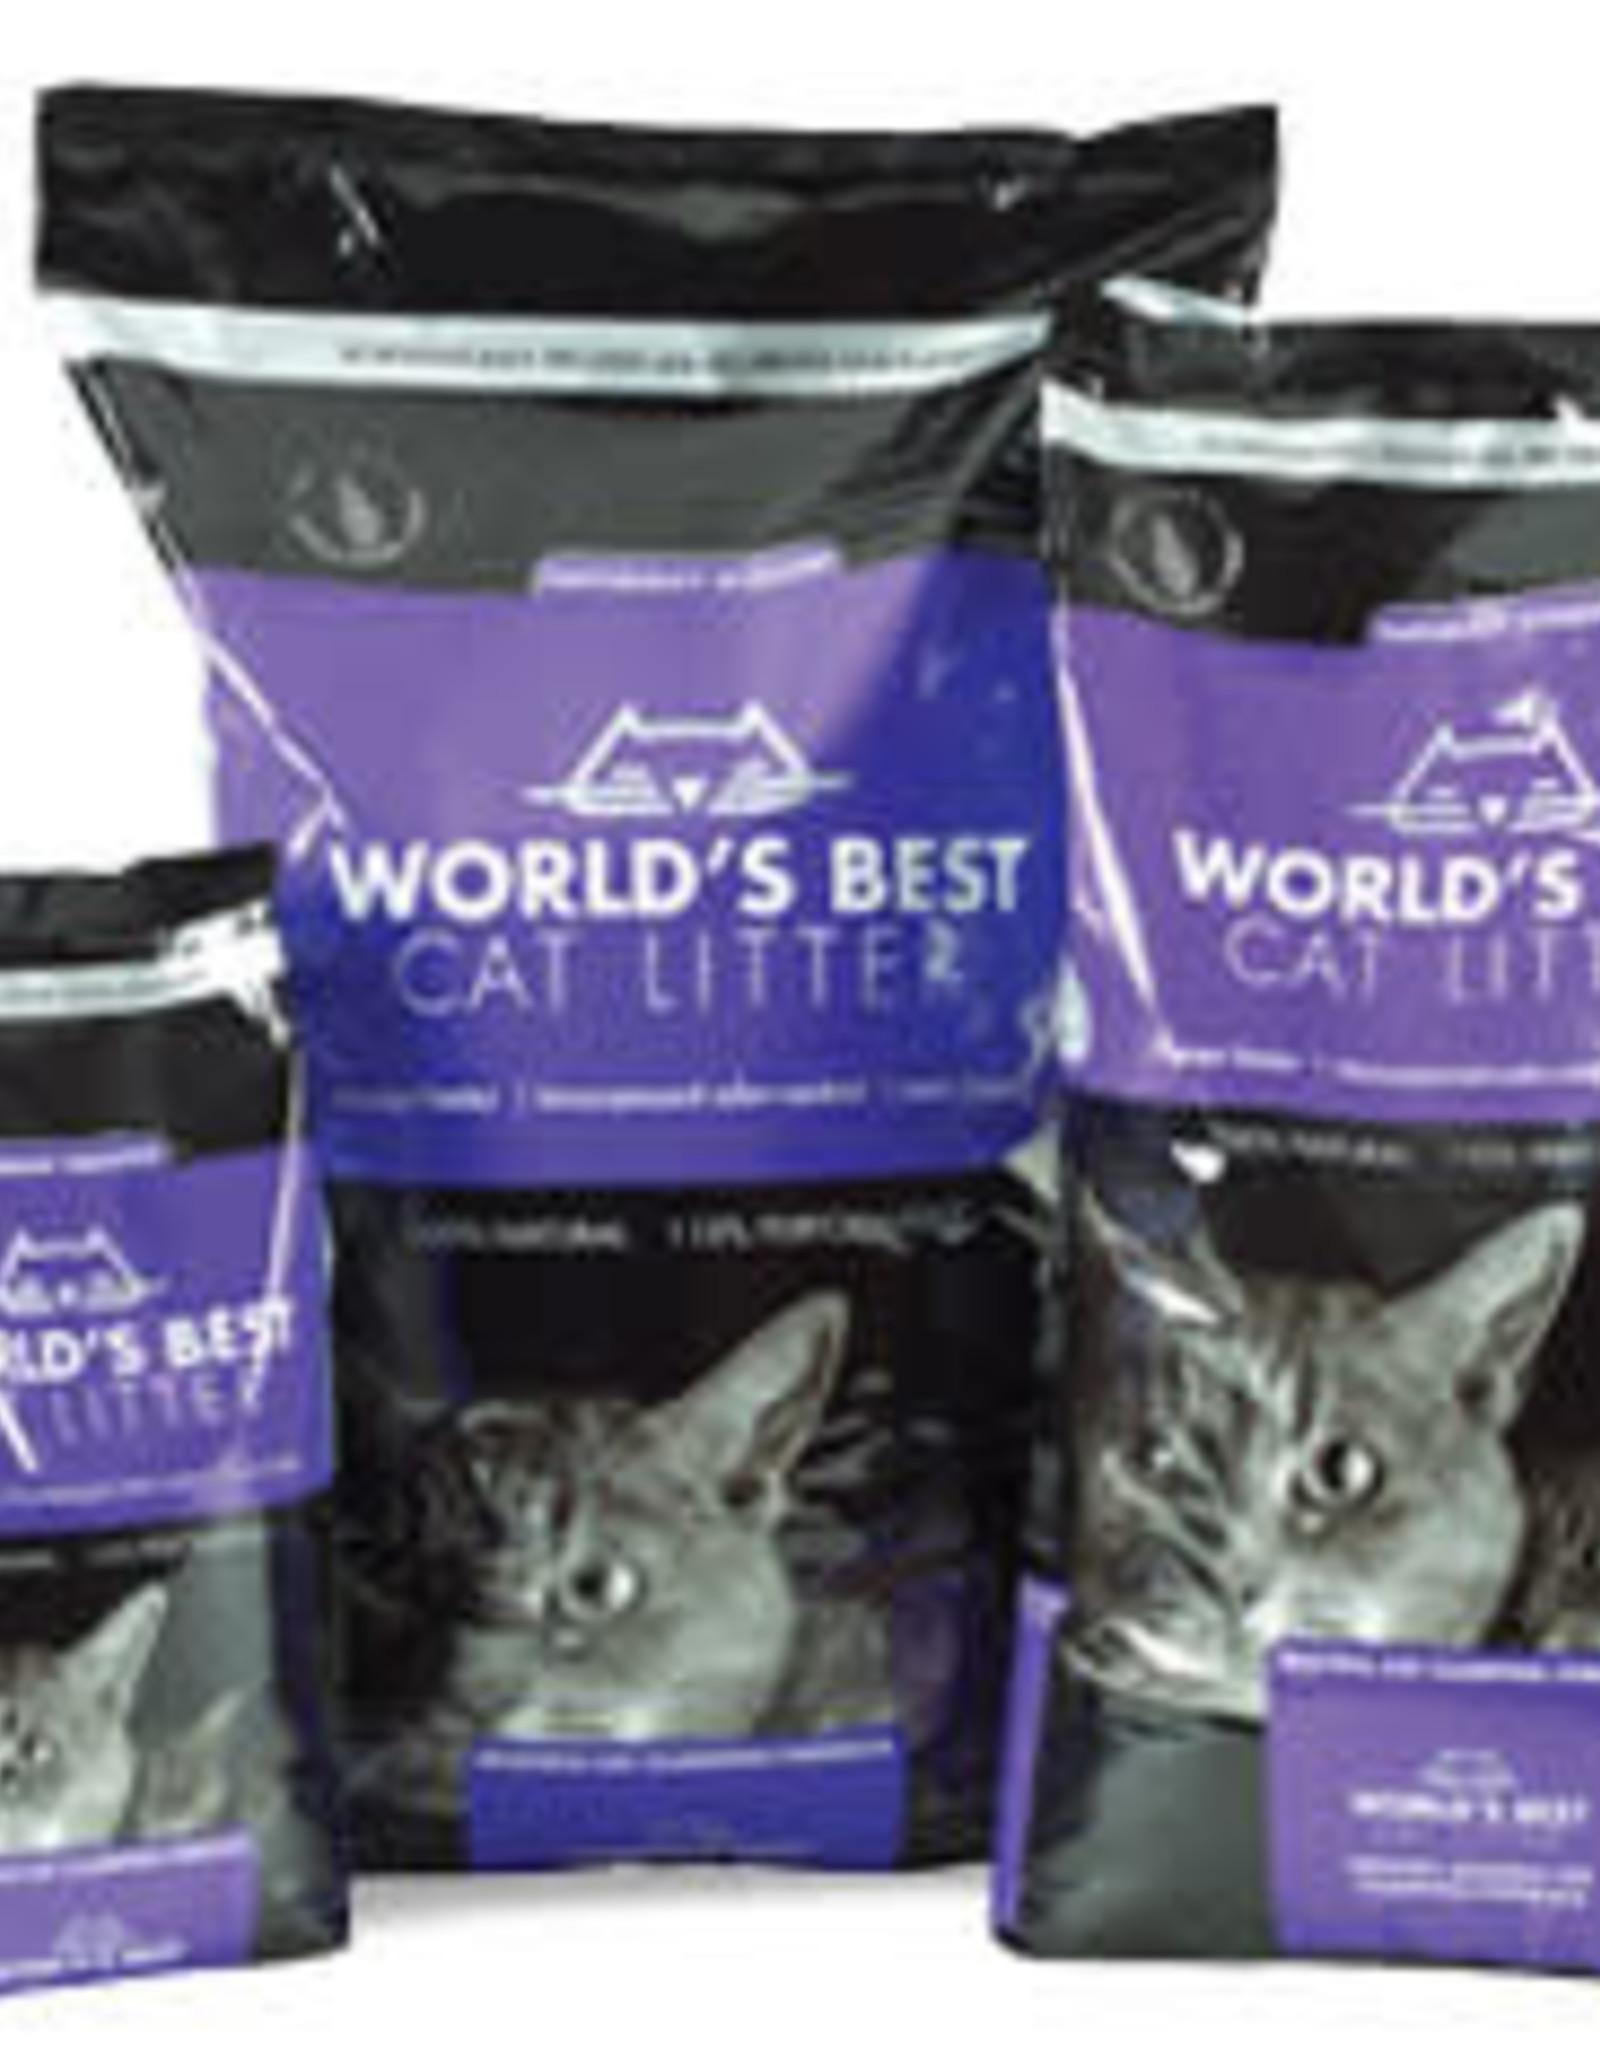 WORLD'S BEST WORLD'S BEST CAT LITTER MULTI-CAT LAVENDER SCENTED 8#